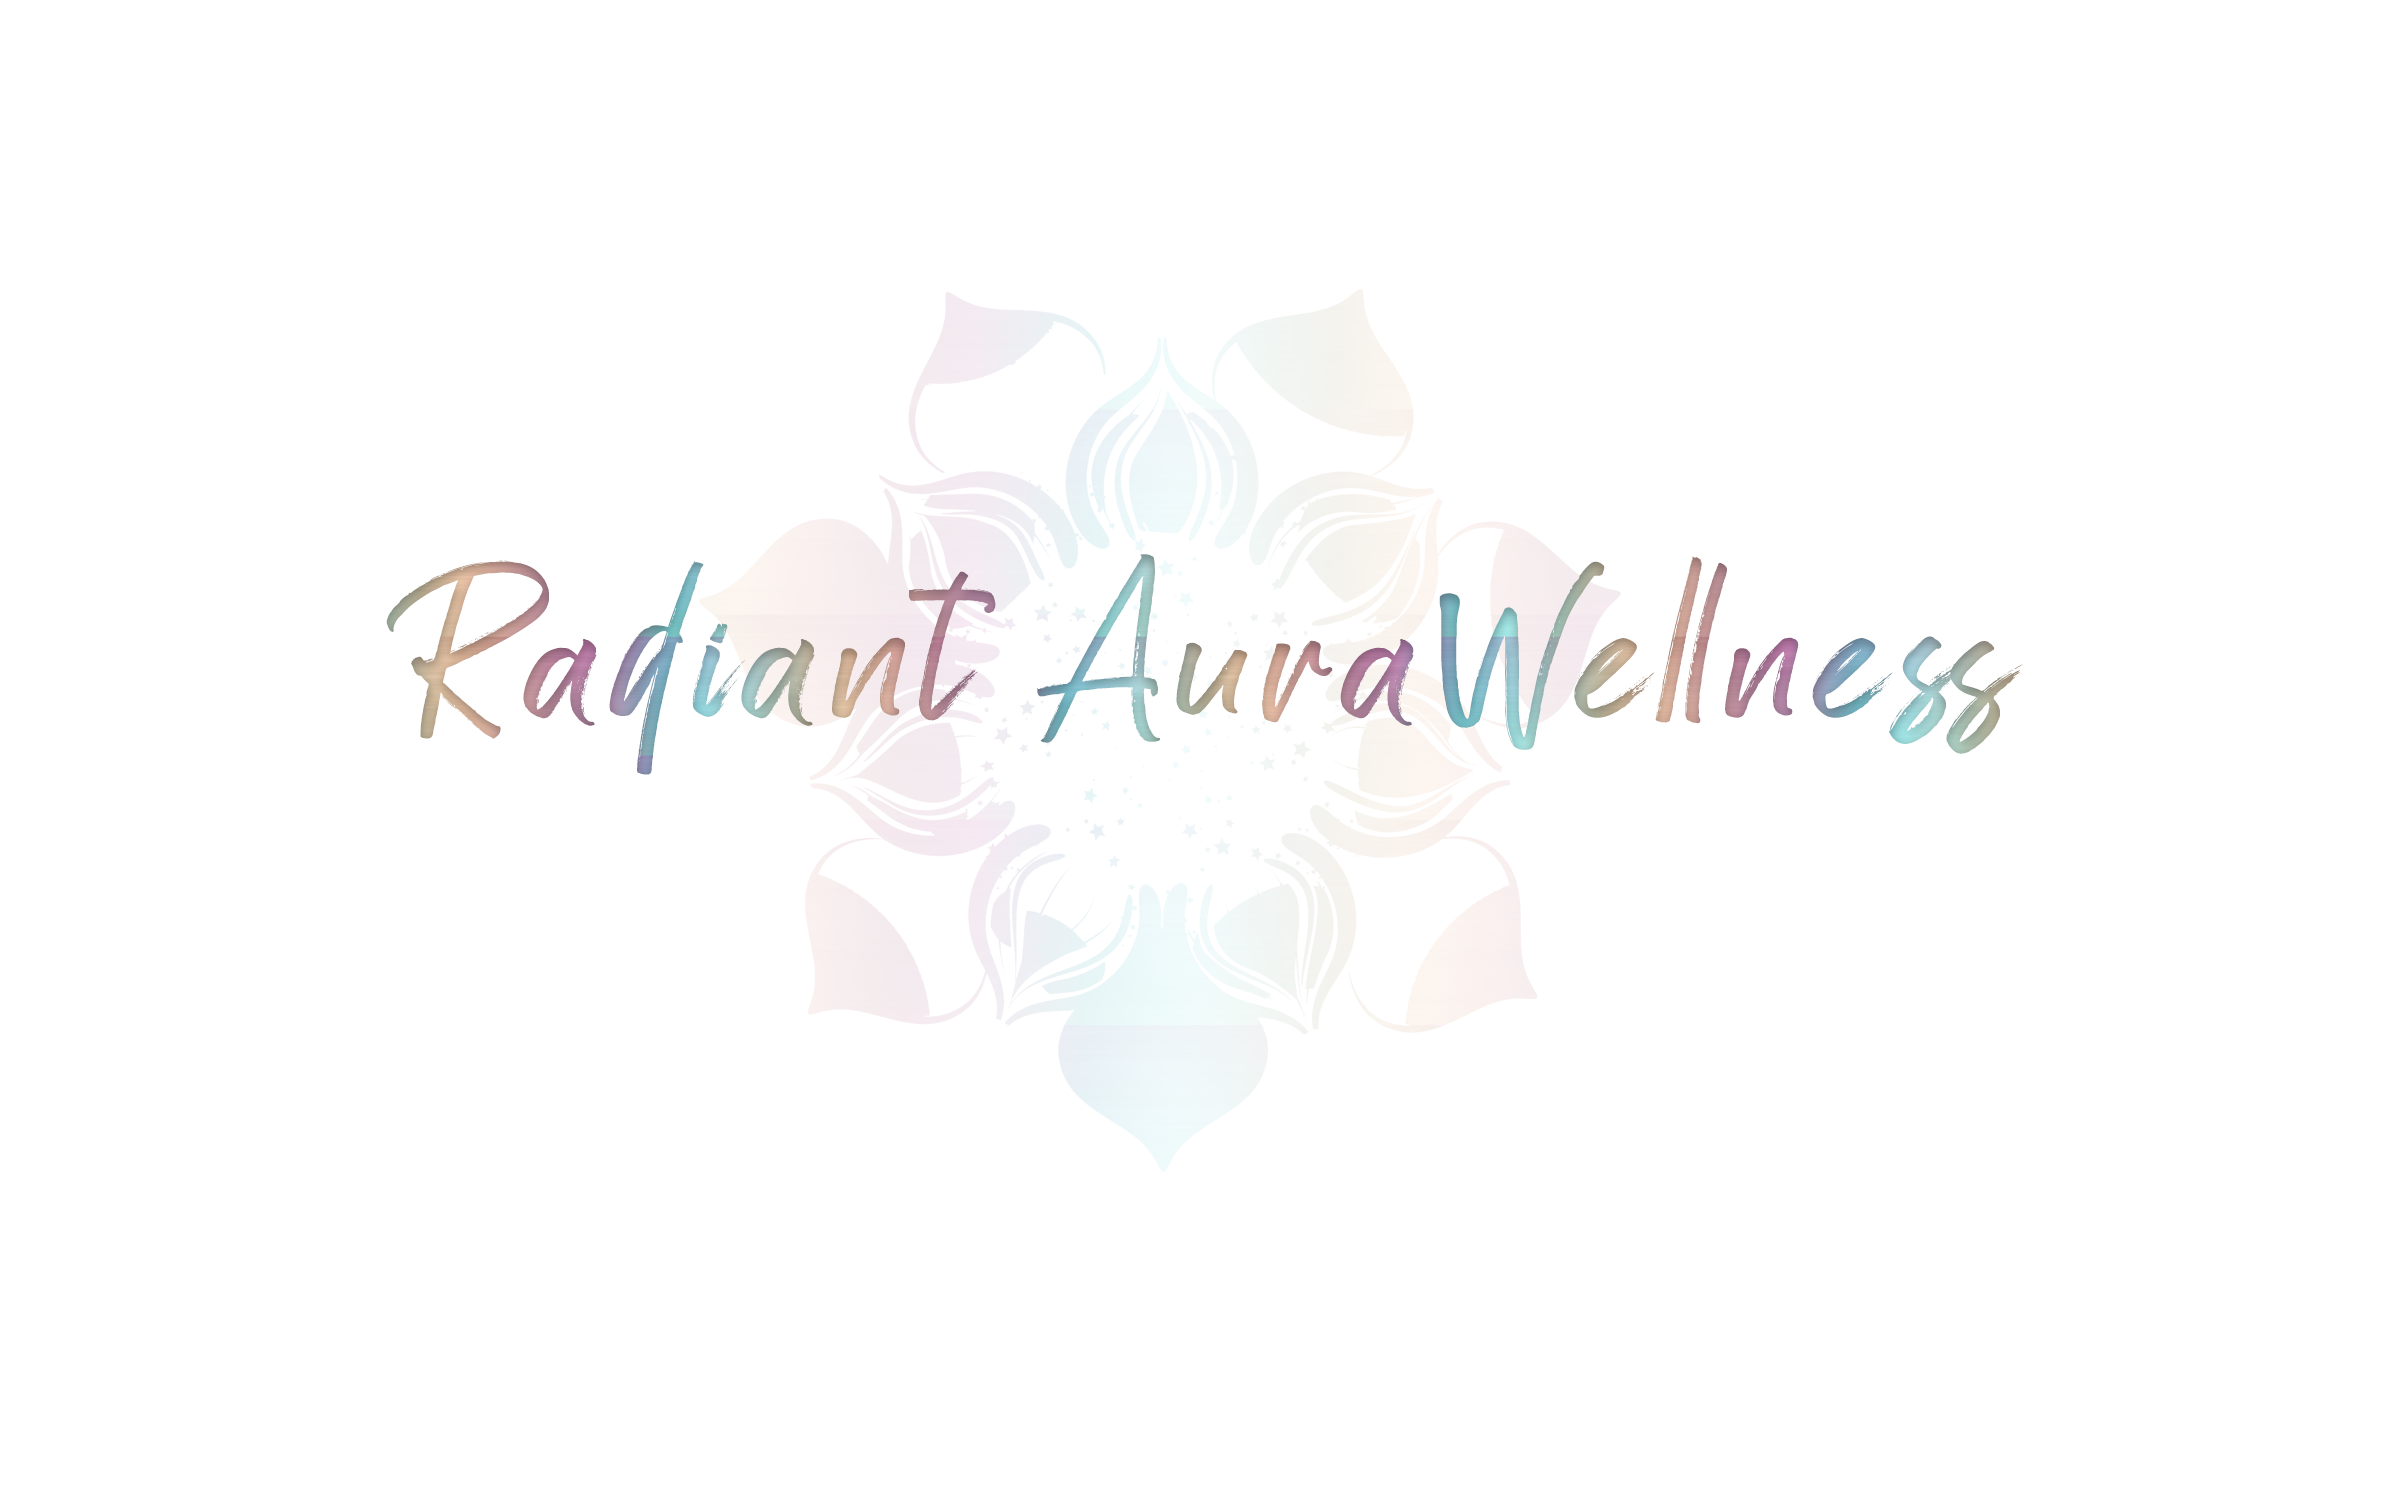 Radiant Aura Wellness